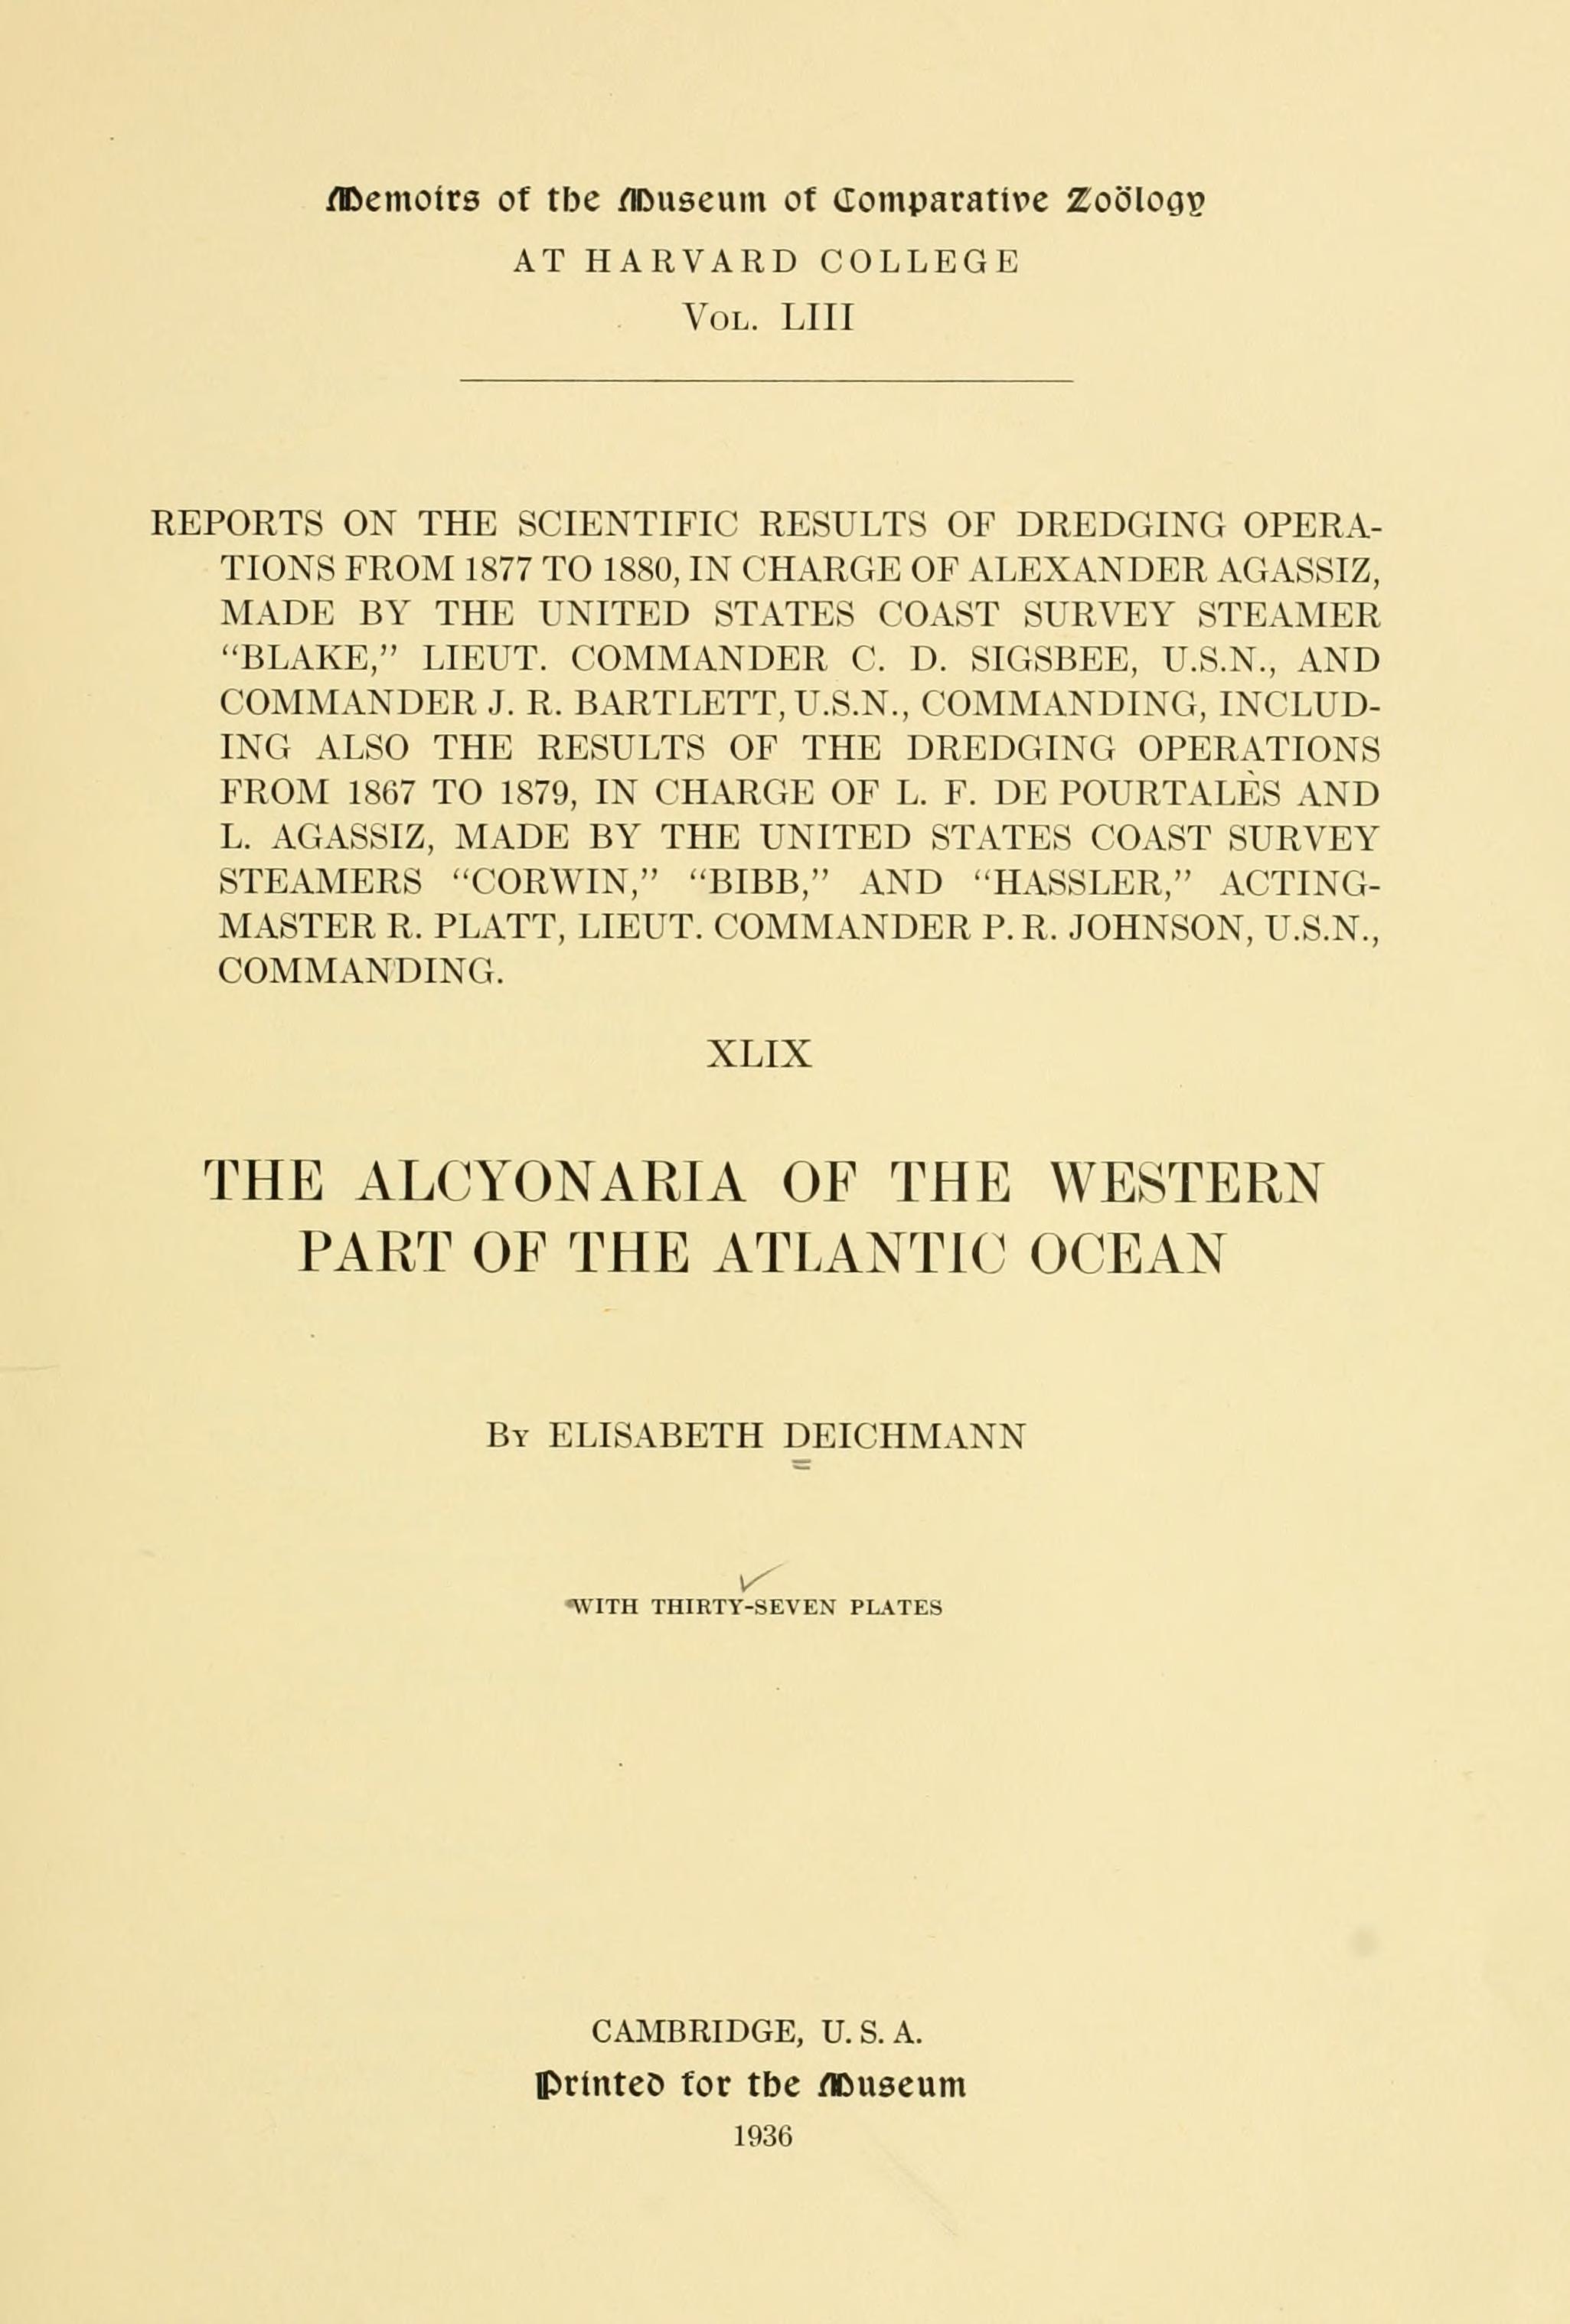 Media type: text; Deichmann 1936 Description: MCZ Memoirs Vol. LIII;